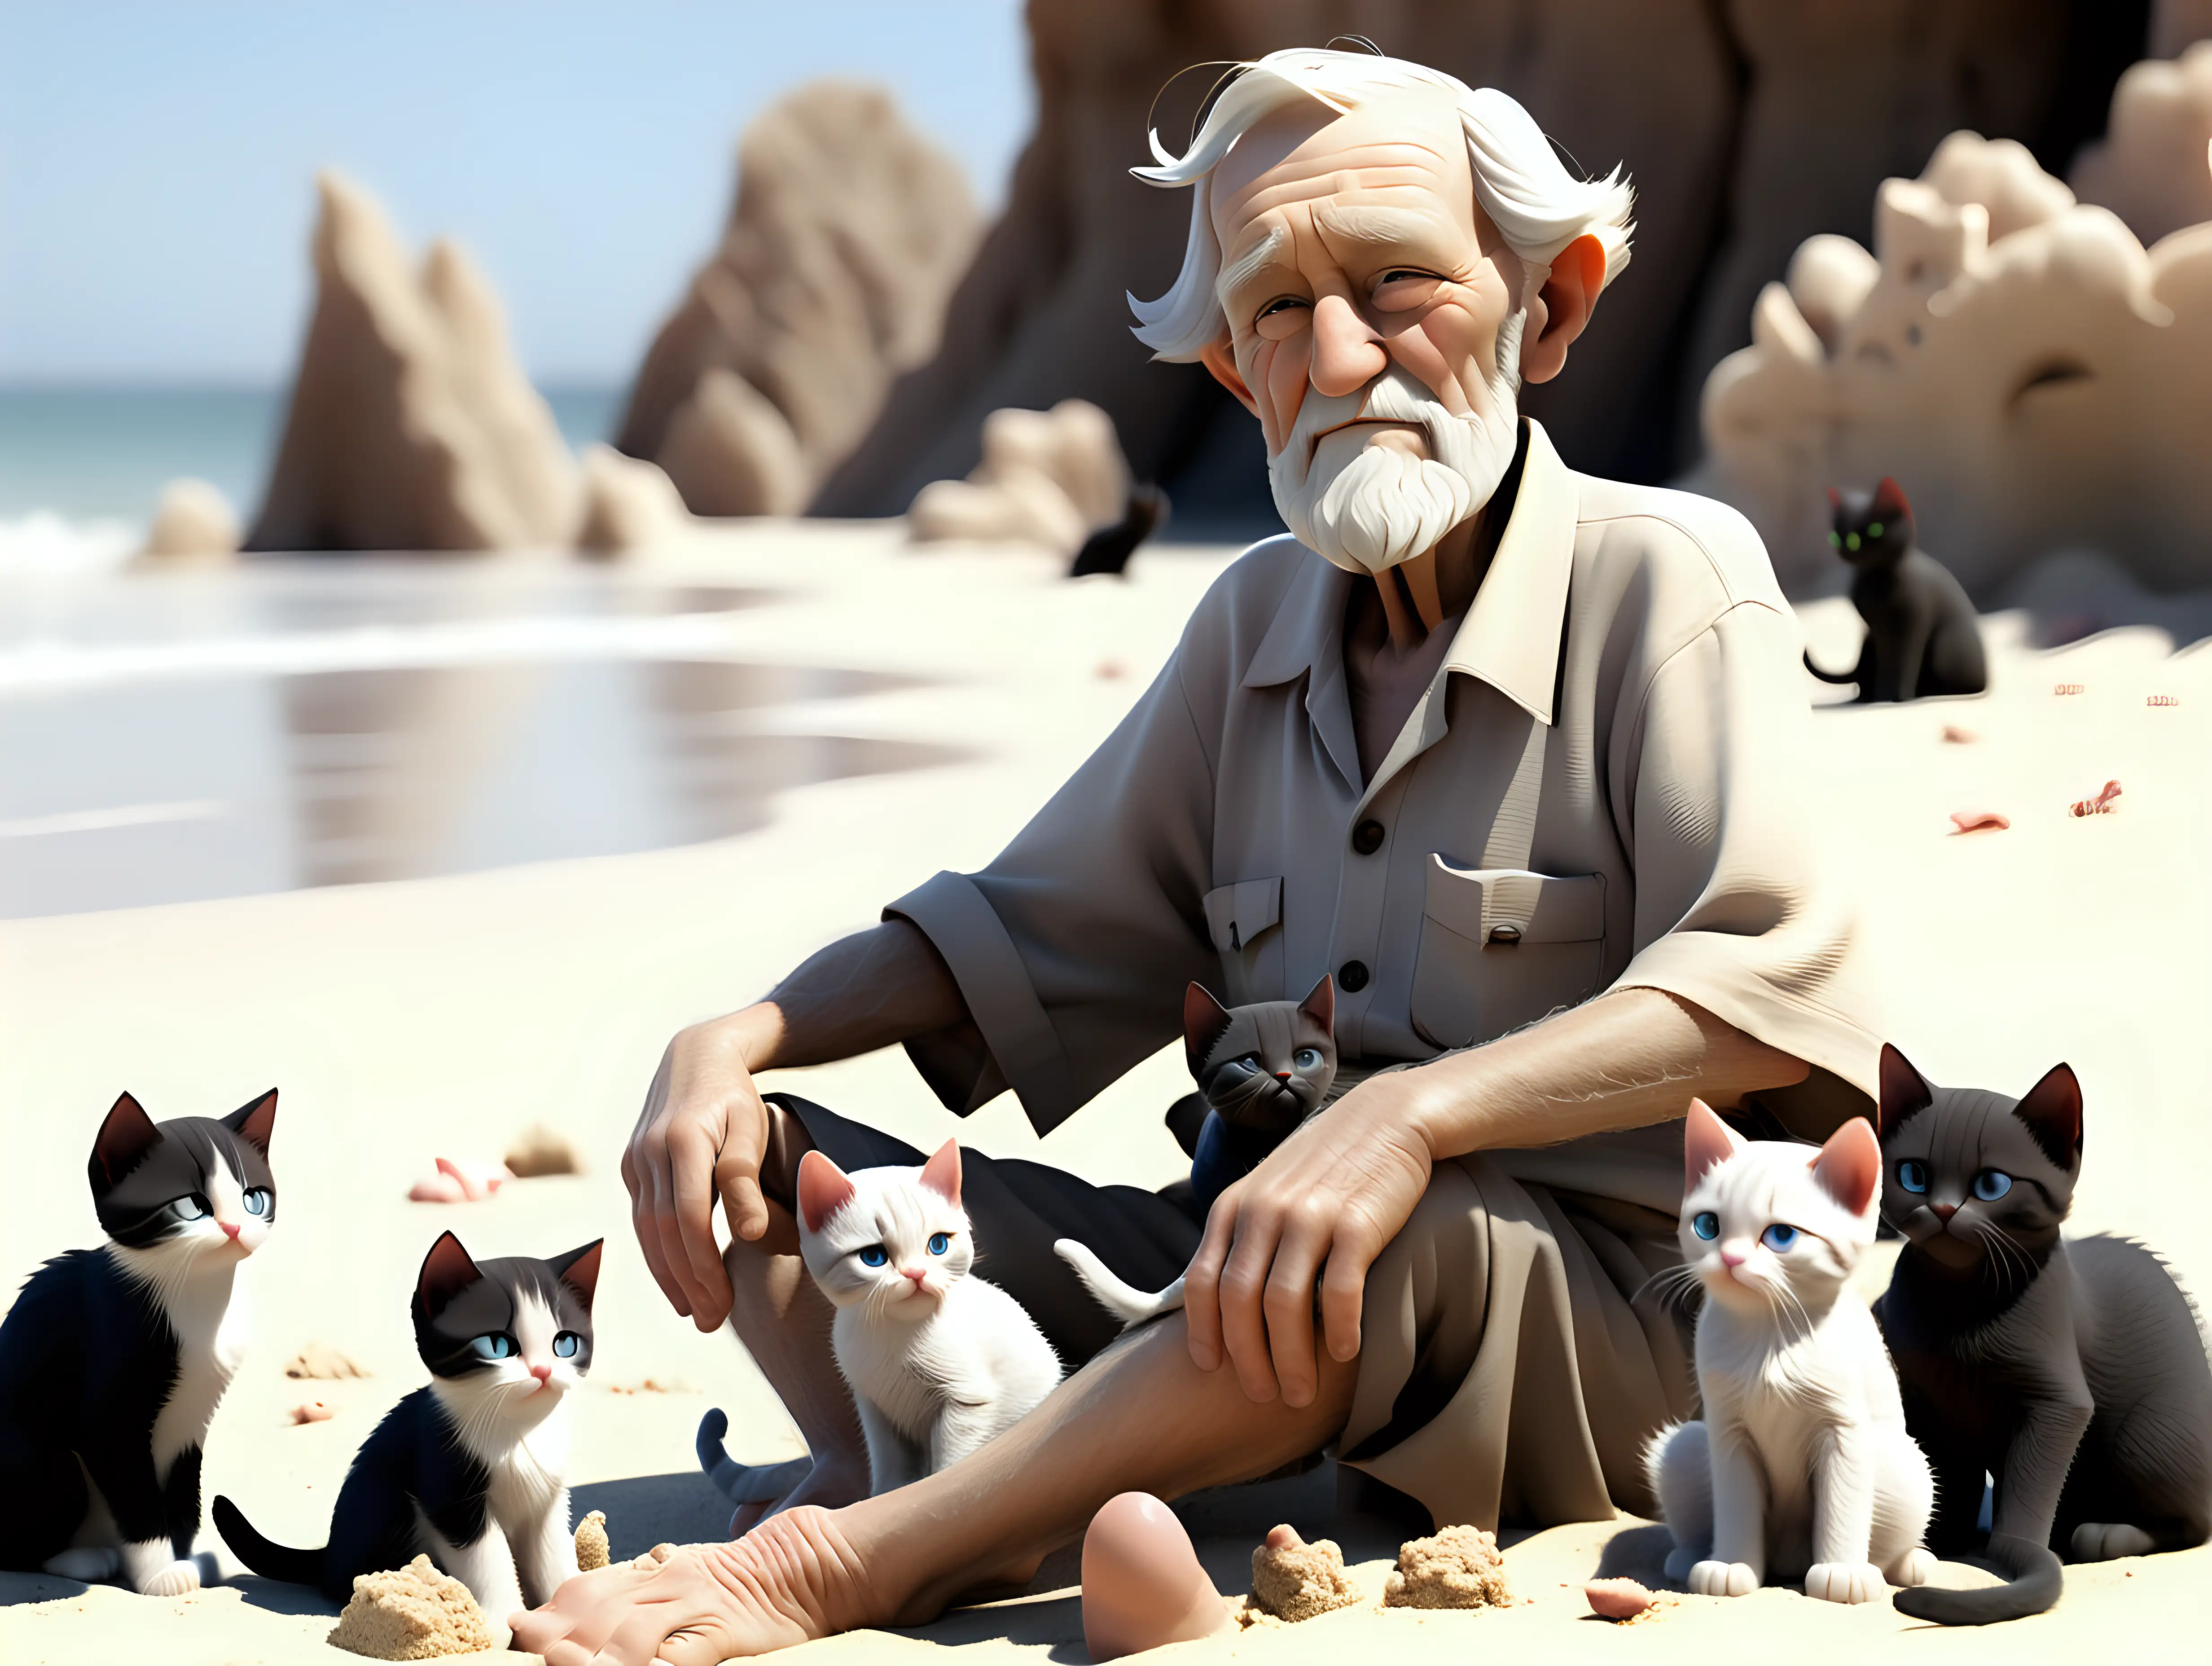 Elderly Gentleman Relaxing on Sandy Shore Amidst Playful Kittens